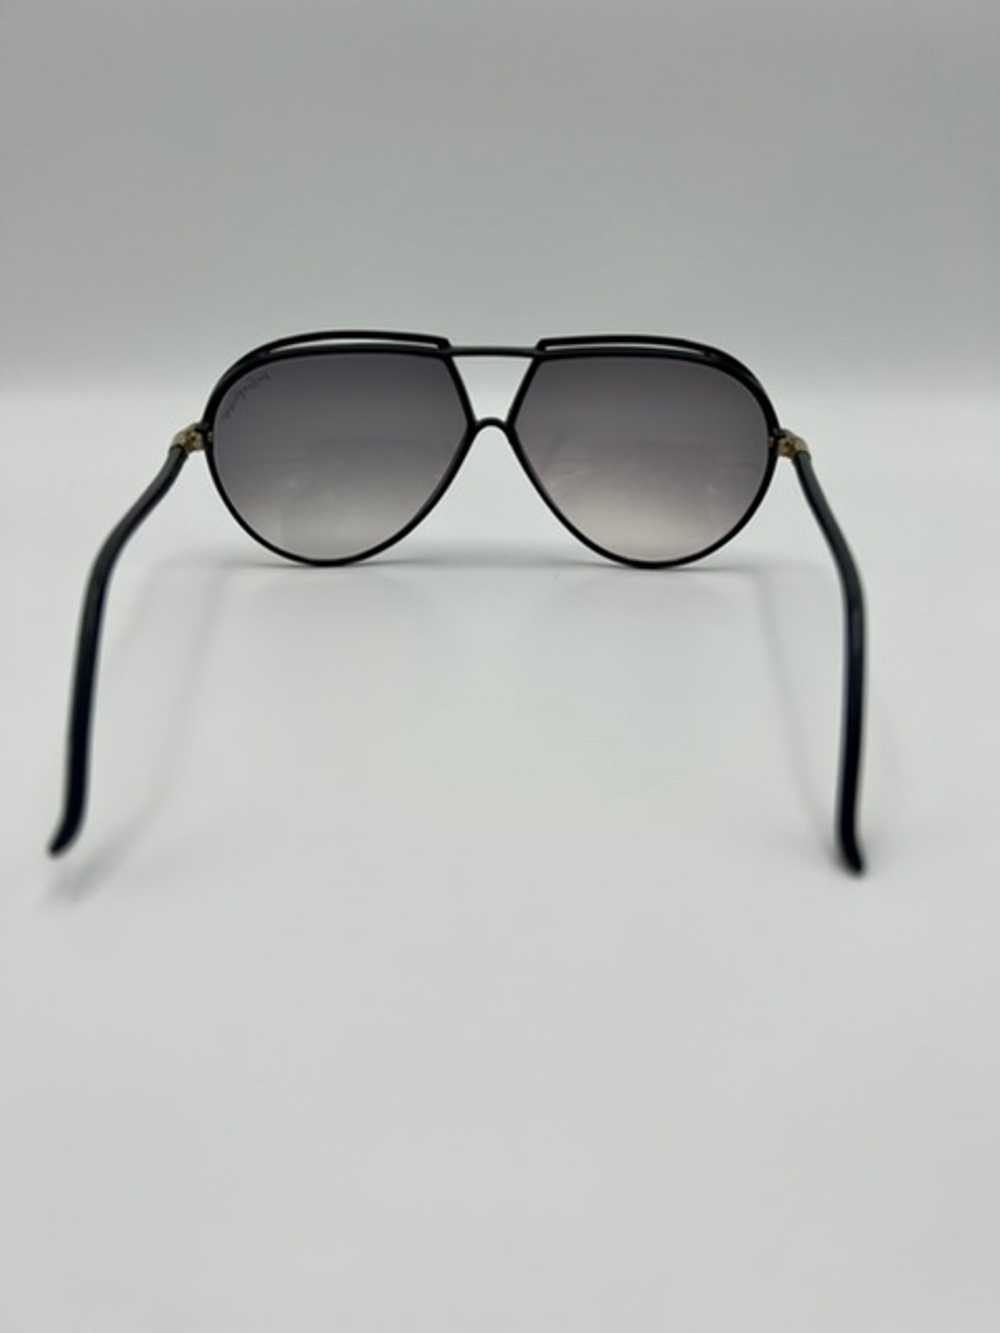 Yves Saint Laurent Coated Frame Aviator Sunglasses - image 2